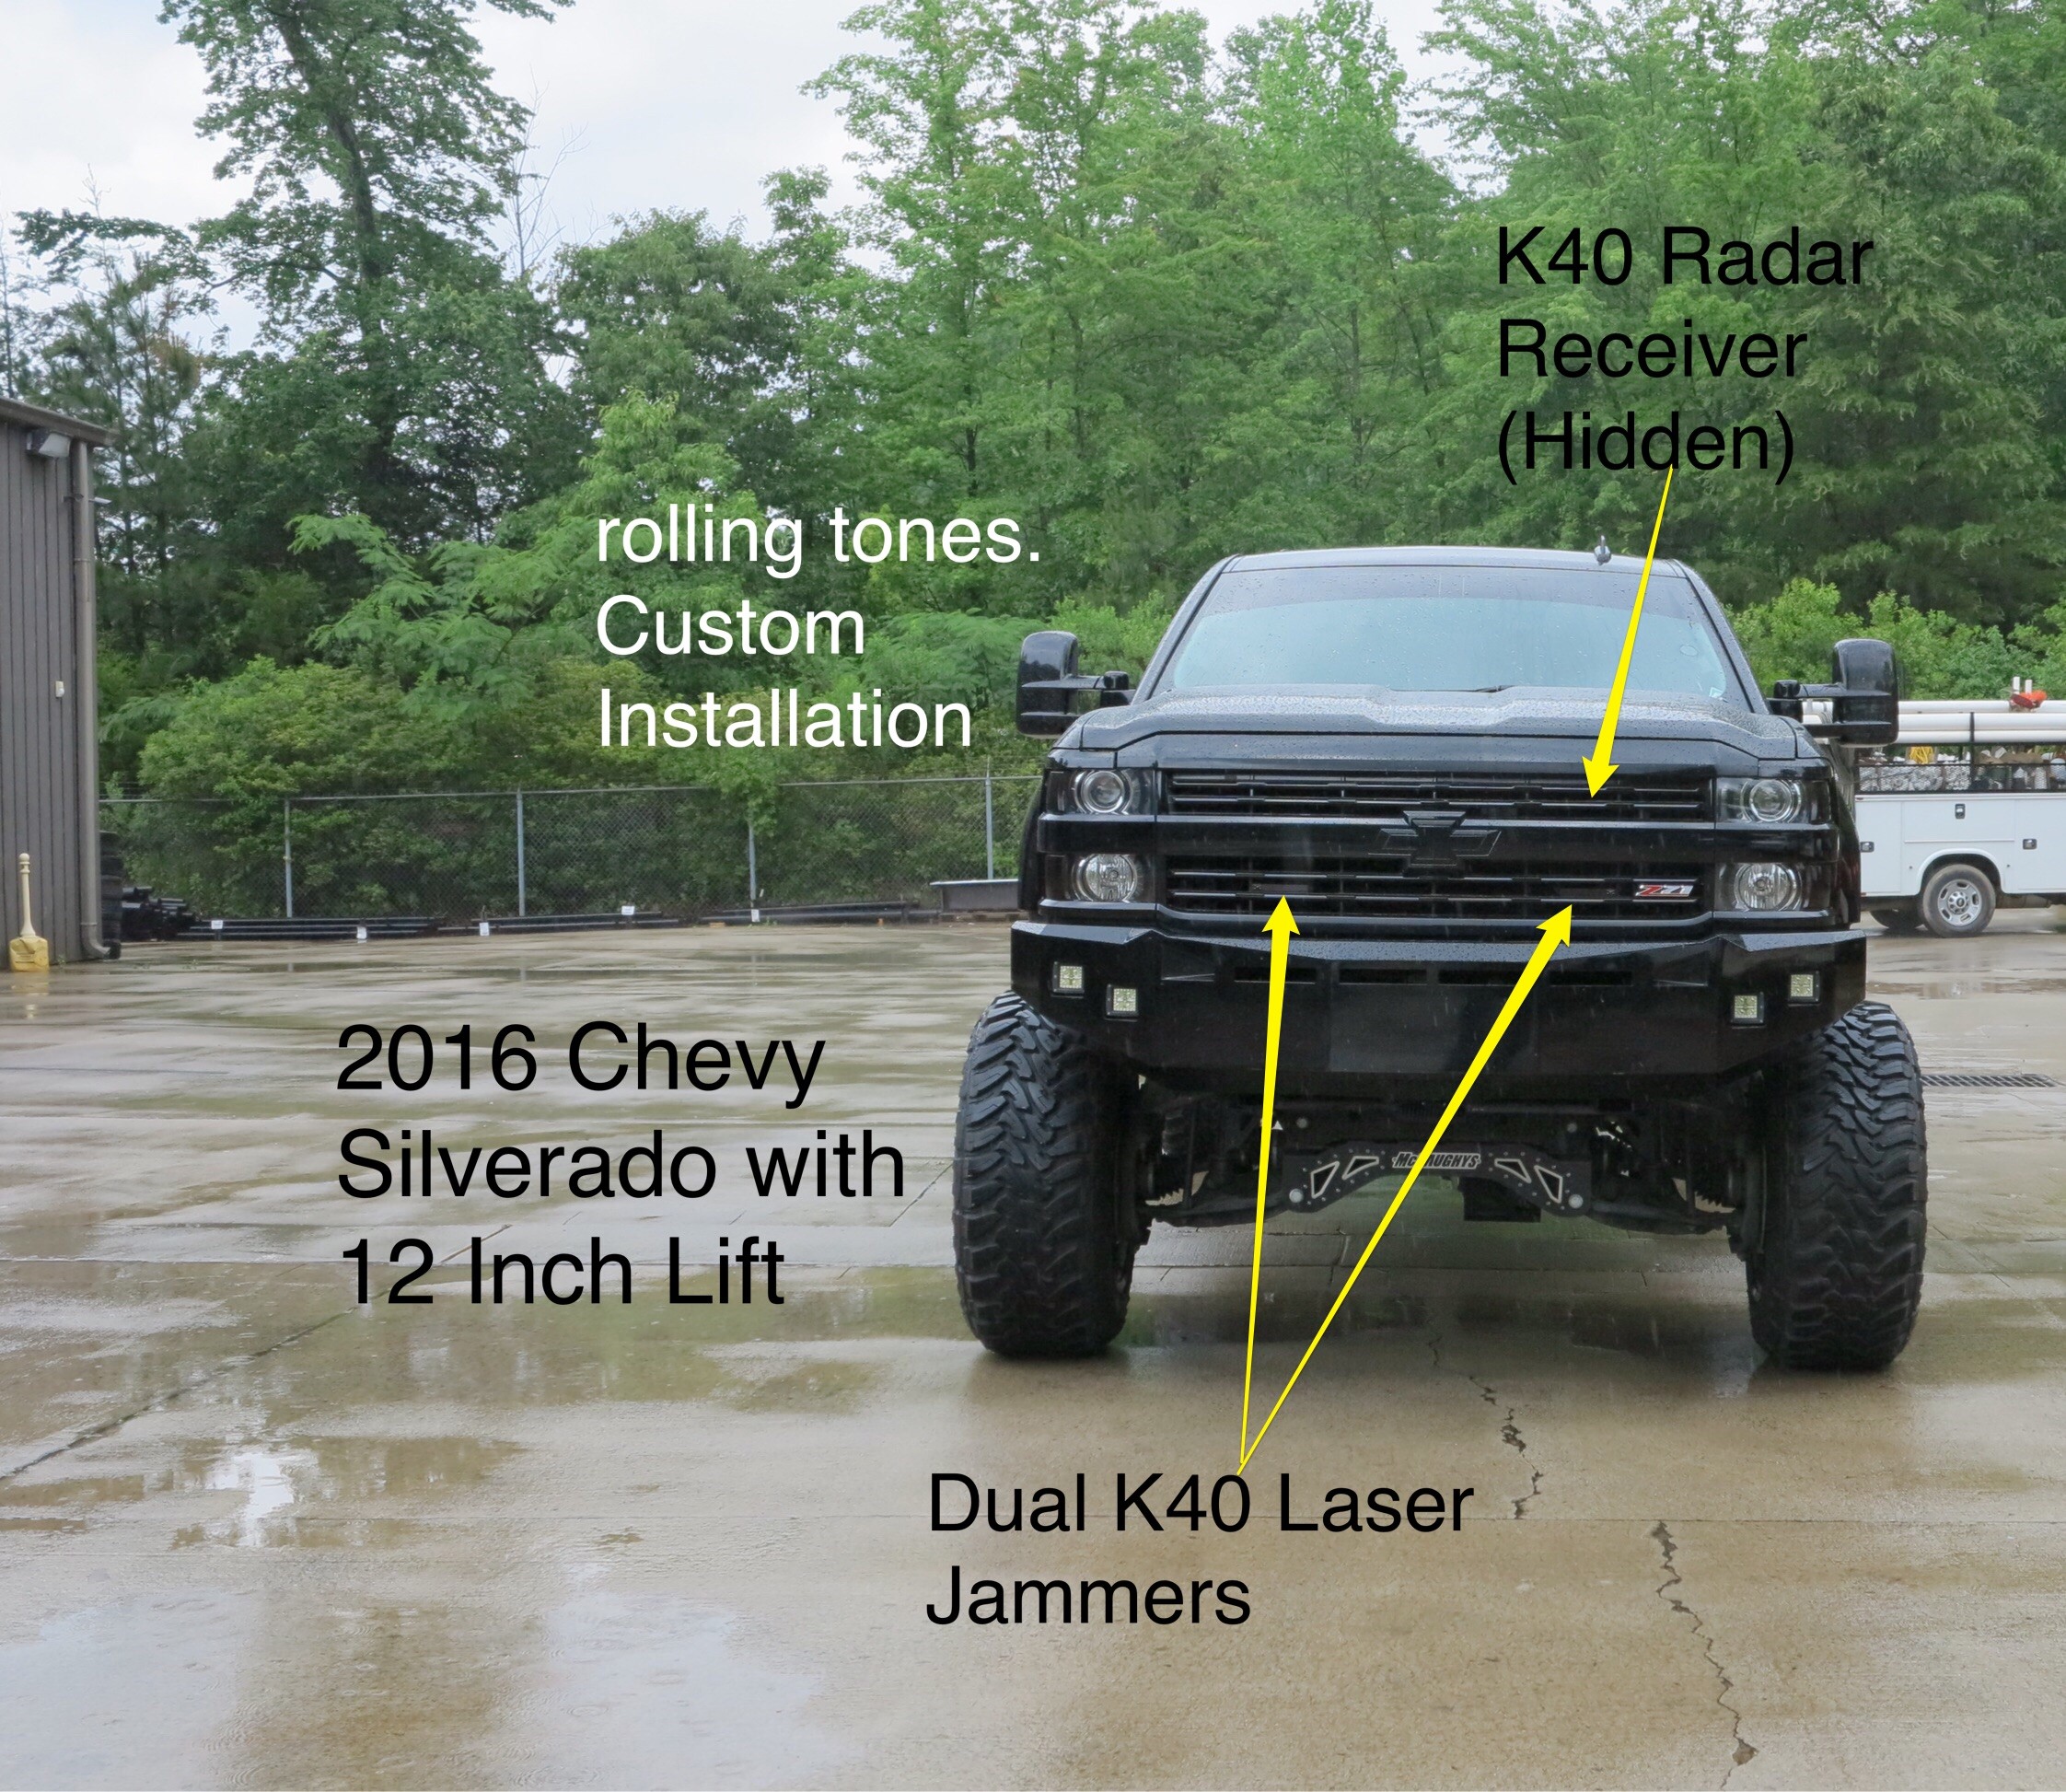 Custom K40 Police Laser Jammers and Hidden Radar Receiver Installed on 2016 Chevrolet Silverado in Charlotte, NC